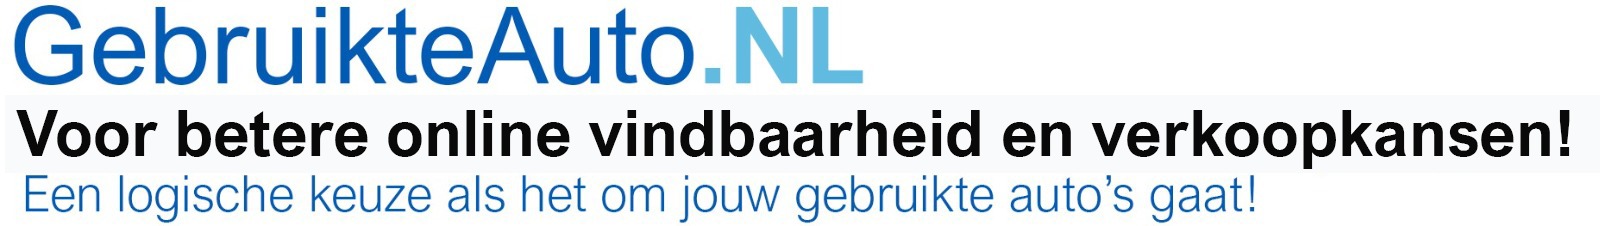 Logo GebruikteAuto.NL